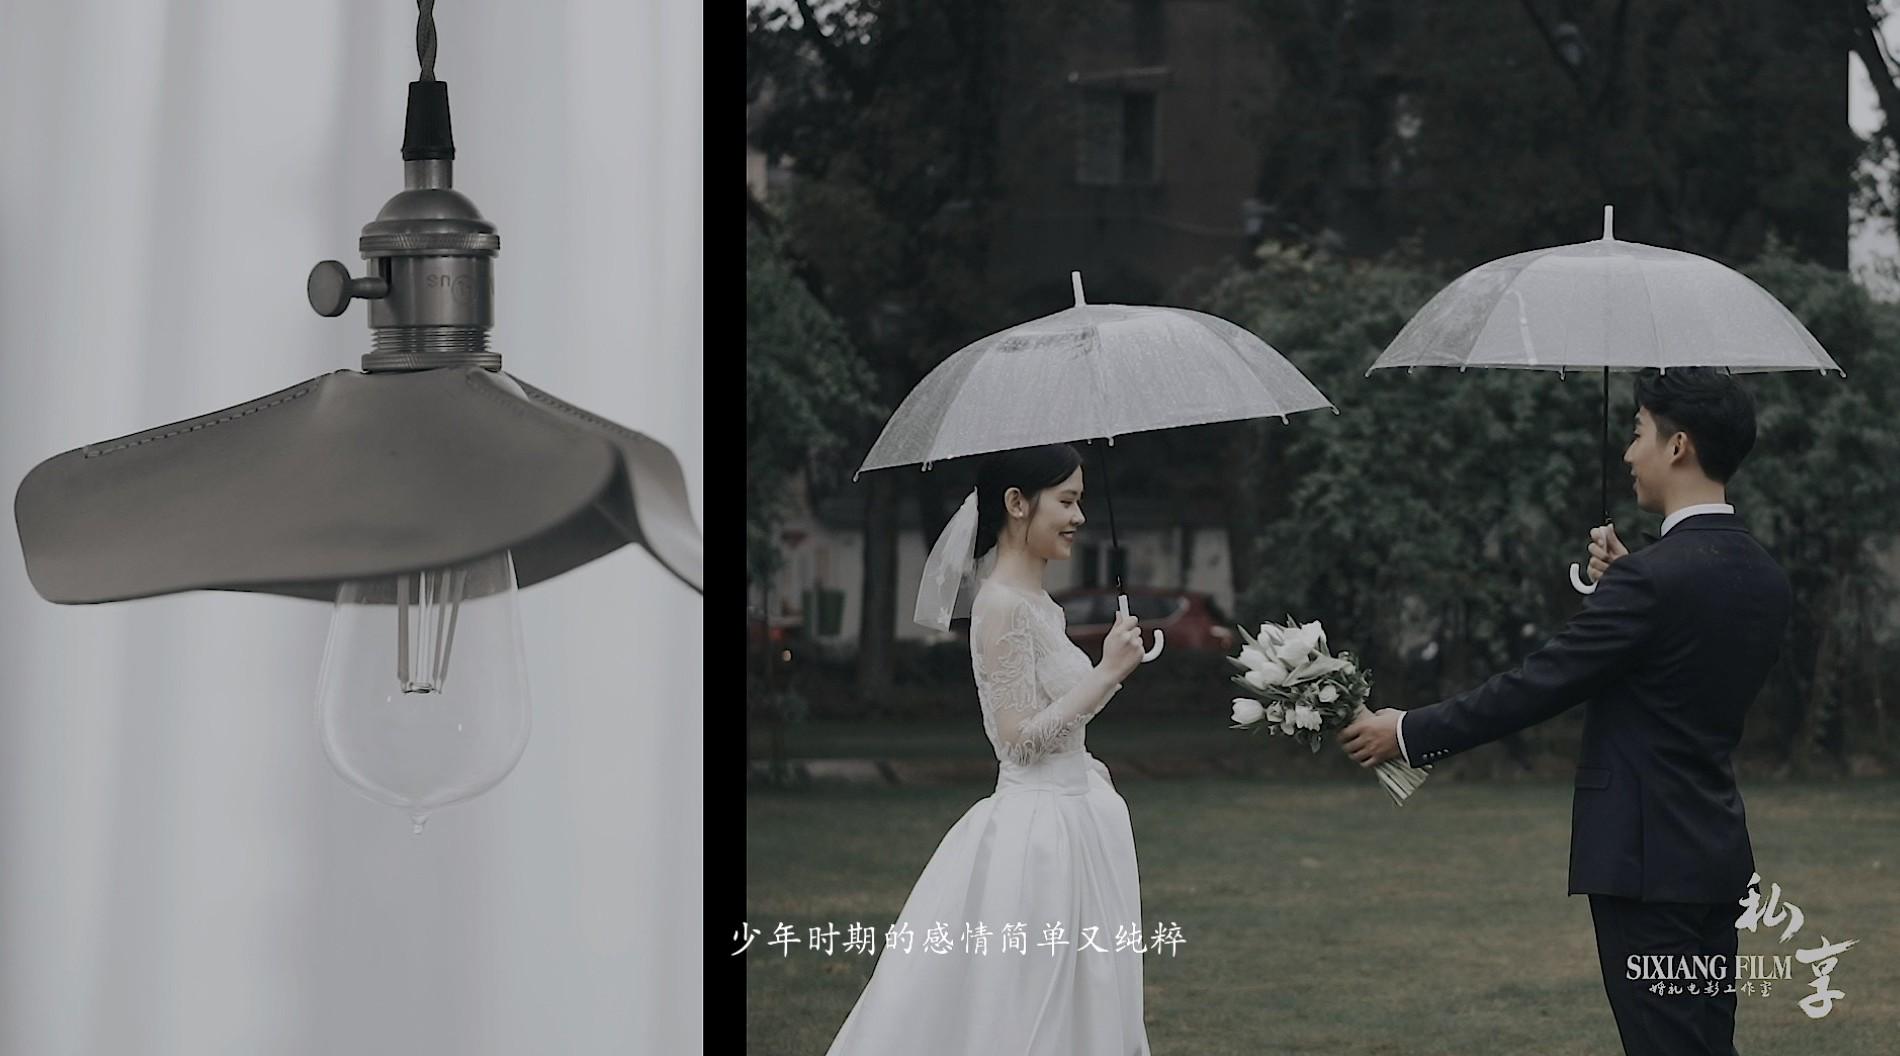 私享FILM 佳作欣赏 | Wedding microfilm 吴益帆&李静雅